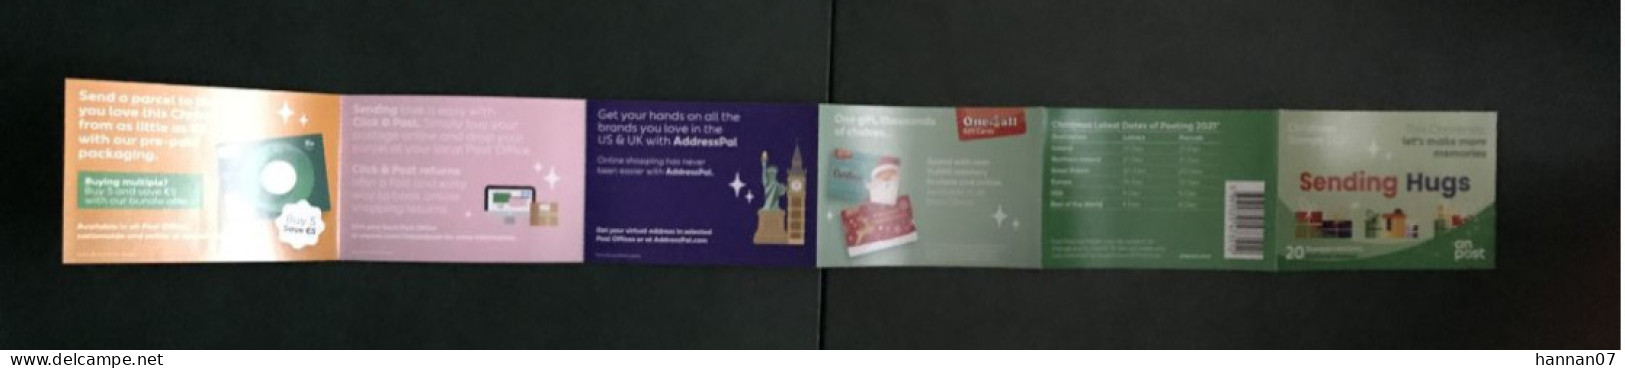 Ireland 2021 Christmas Booklet 20 Stamps / Irlande 2021 Carnet Noel 20 Timbres - Markenheftchen